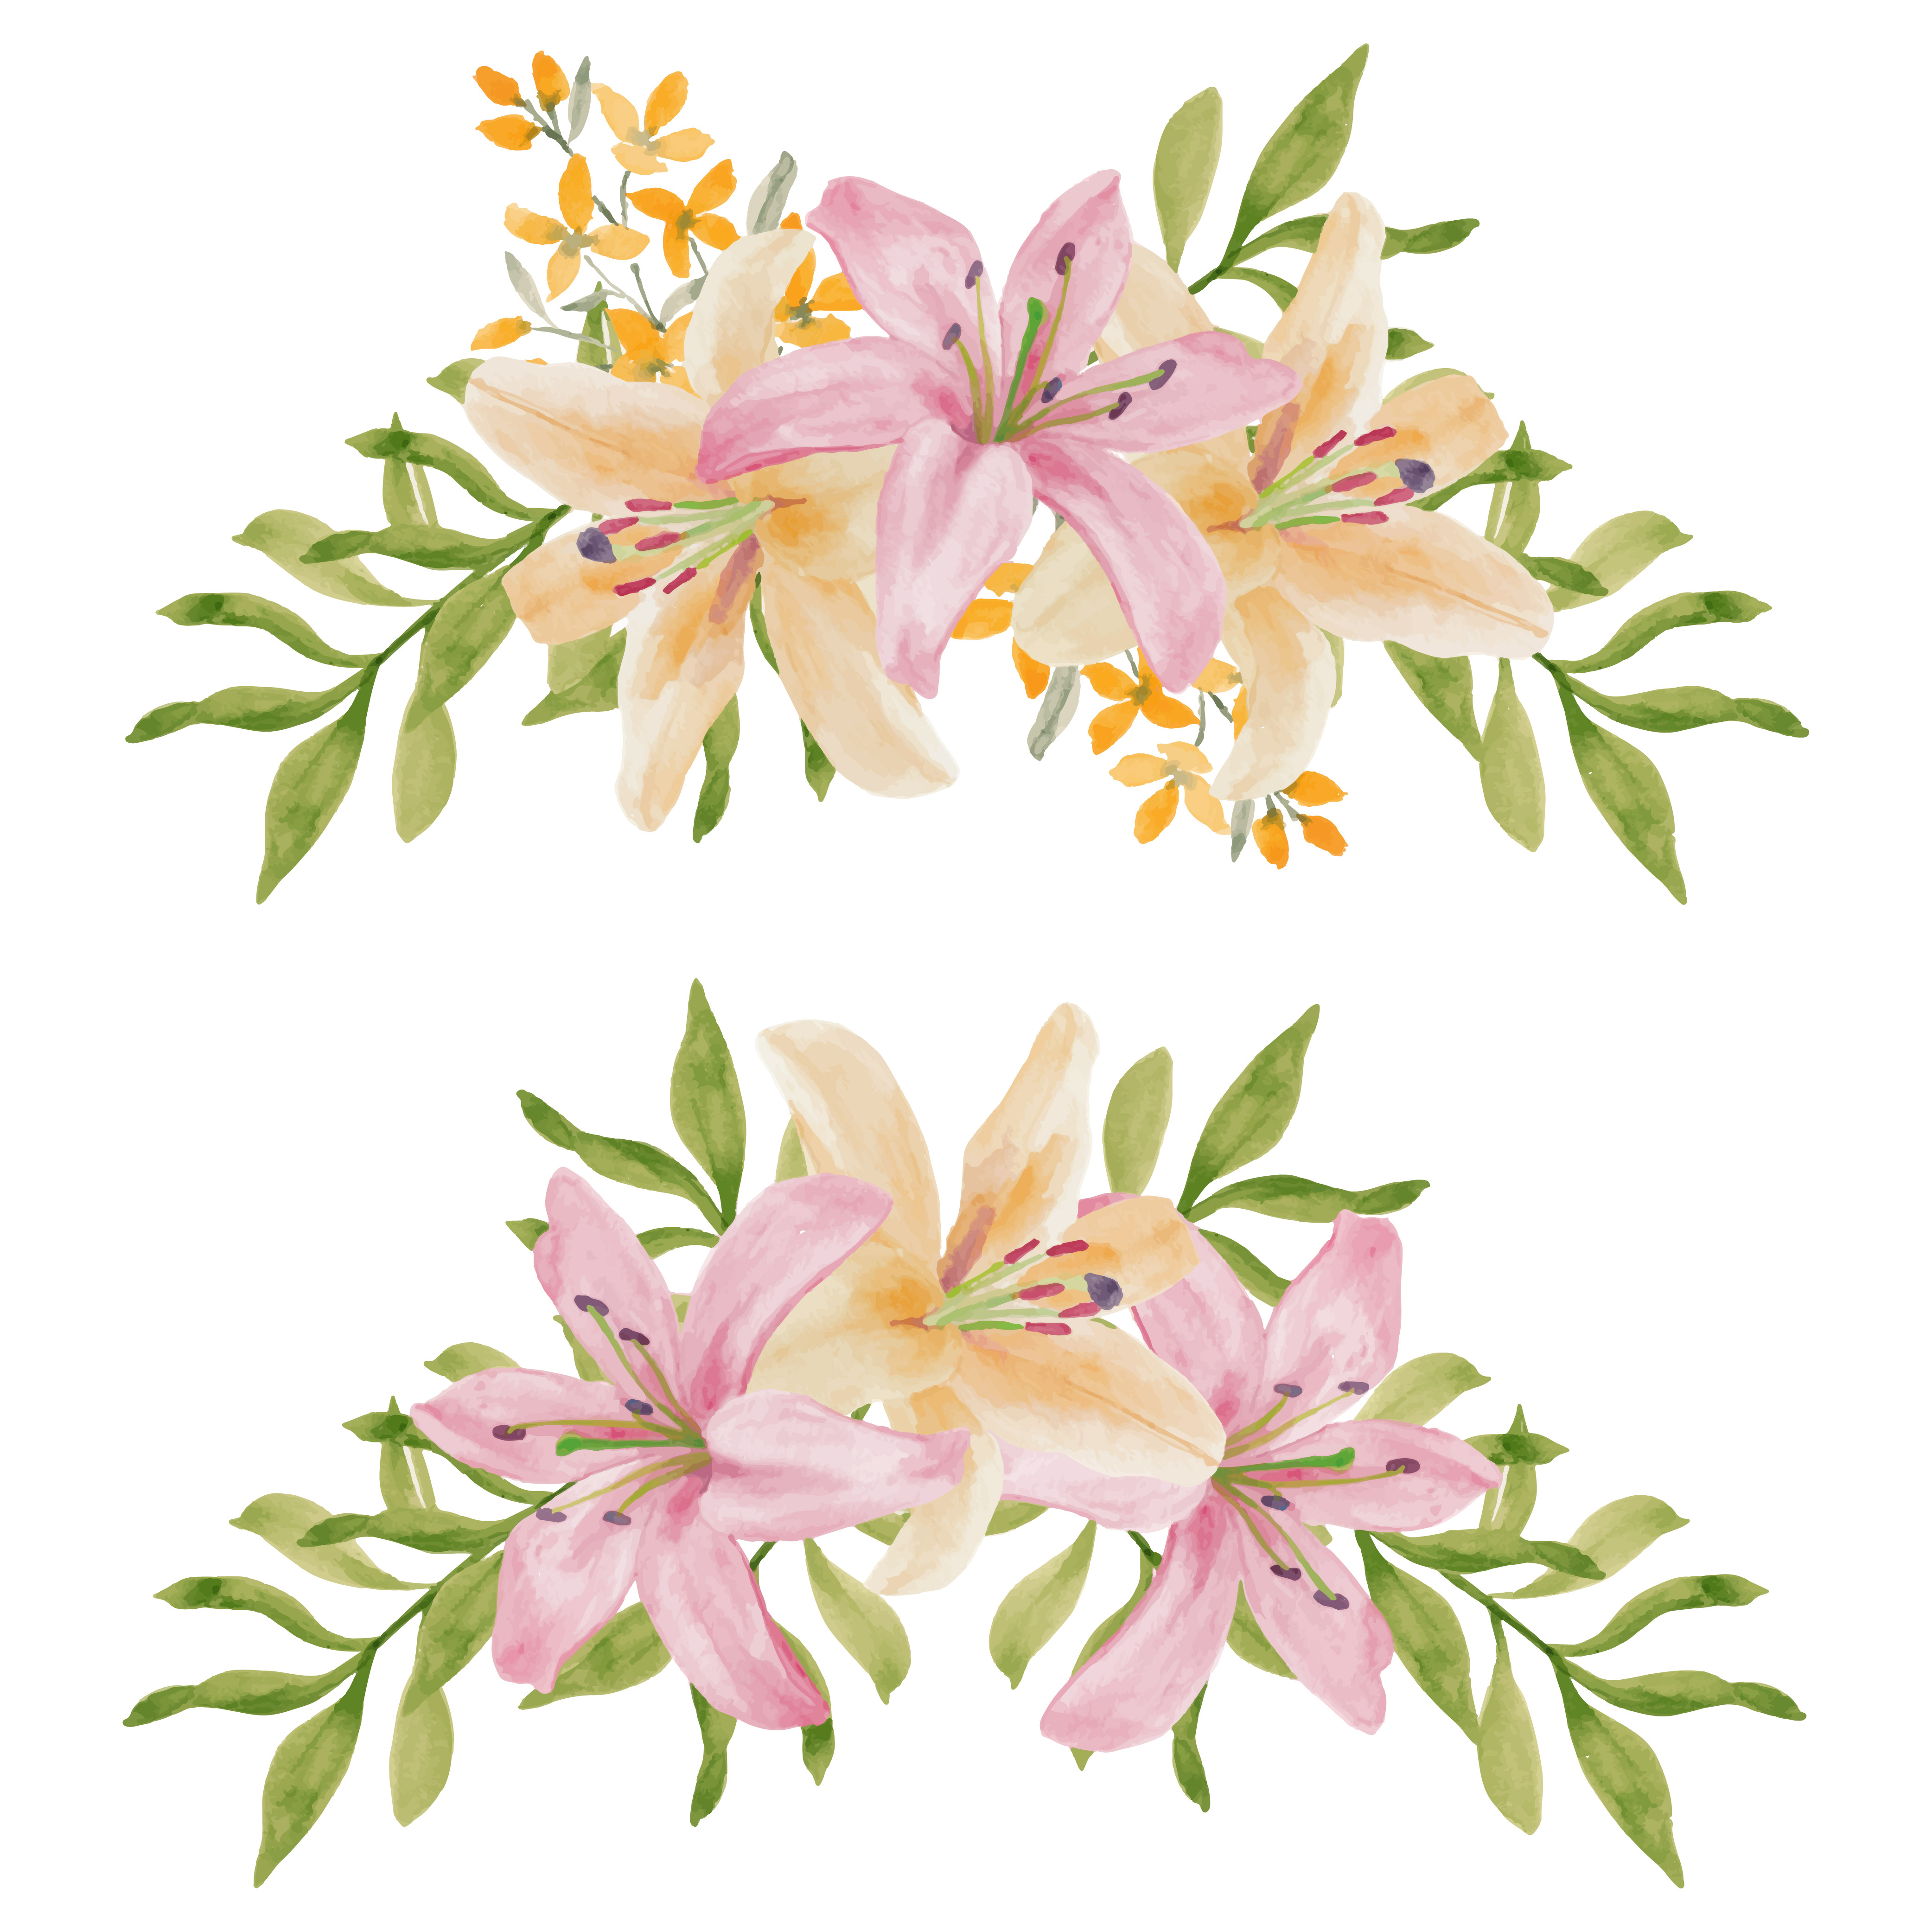 Download Watercolor curved lily flower arrangement set - Download ...